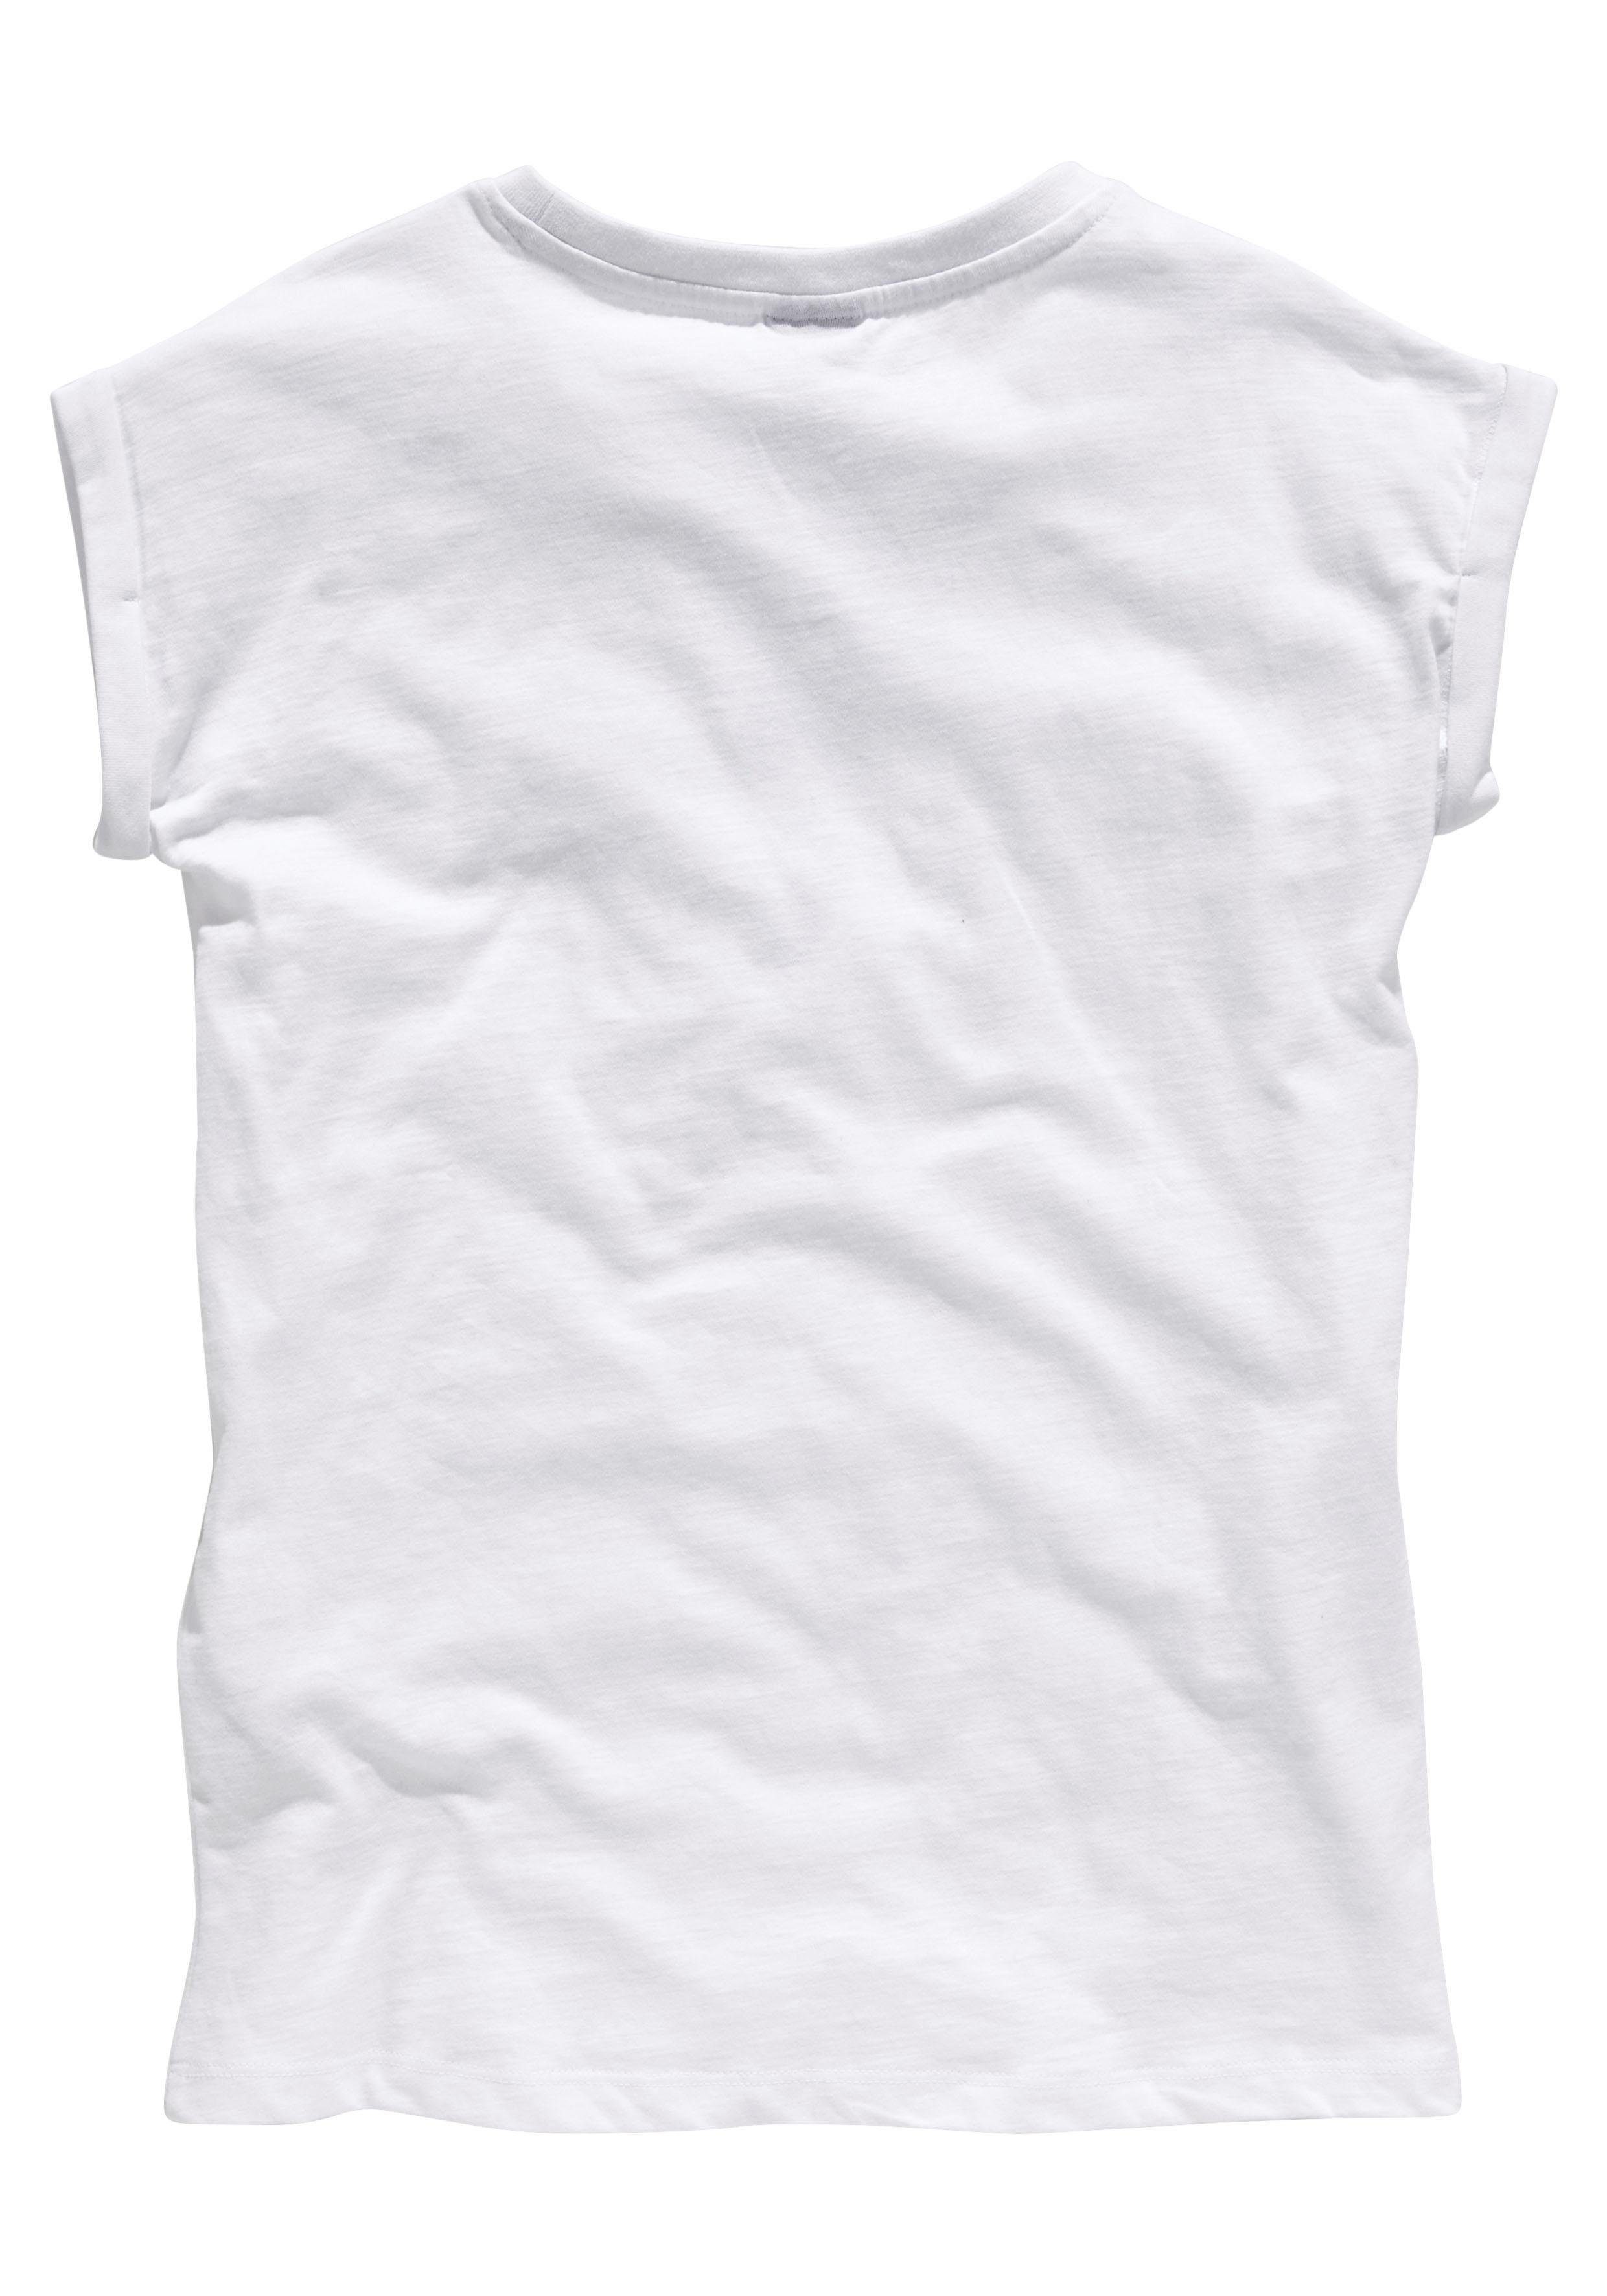 KIDSWORLD T-Shirt Bevor Du weiter Form in legerer fragst: NEIN